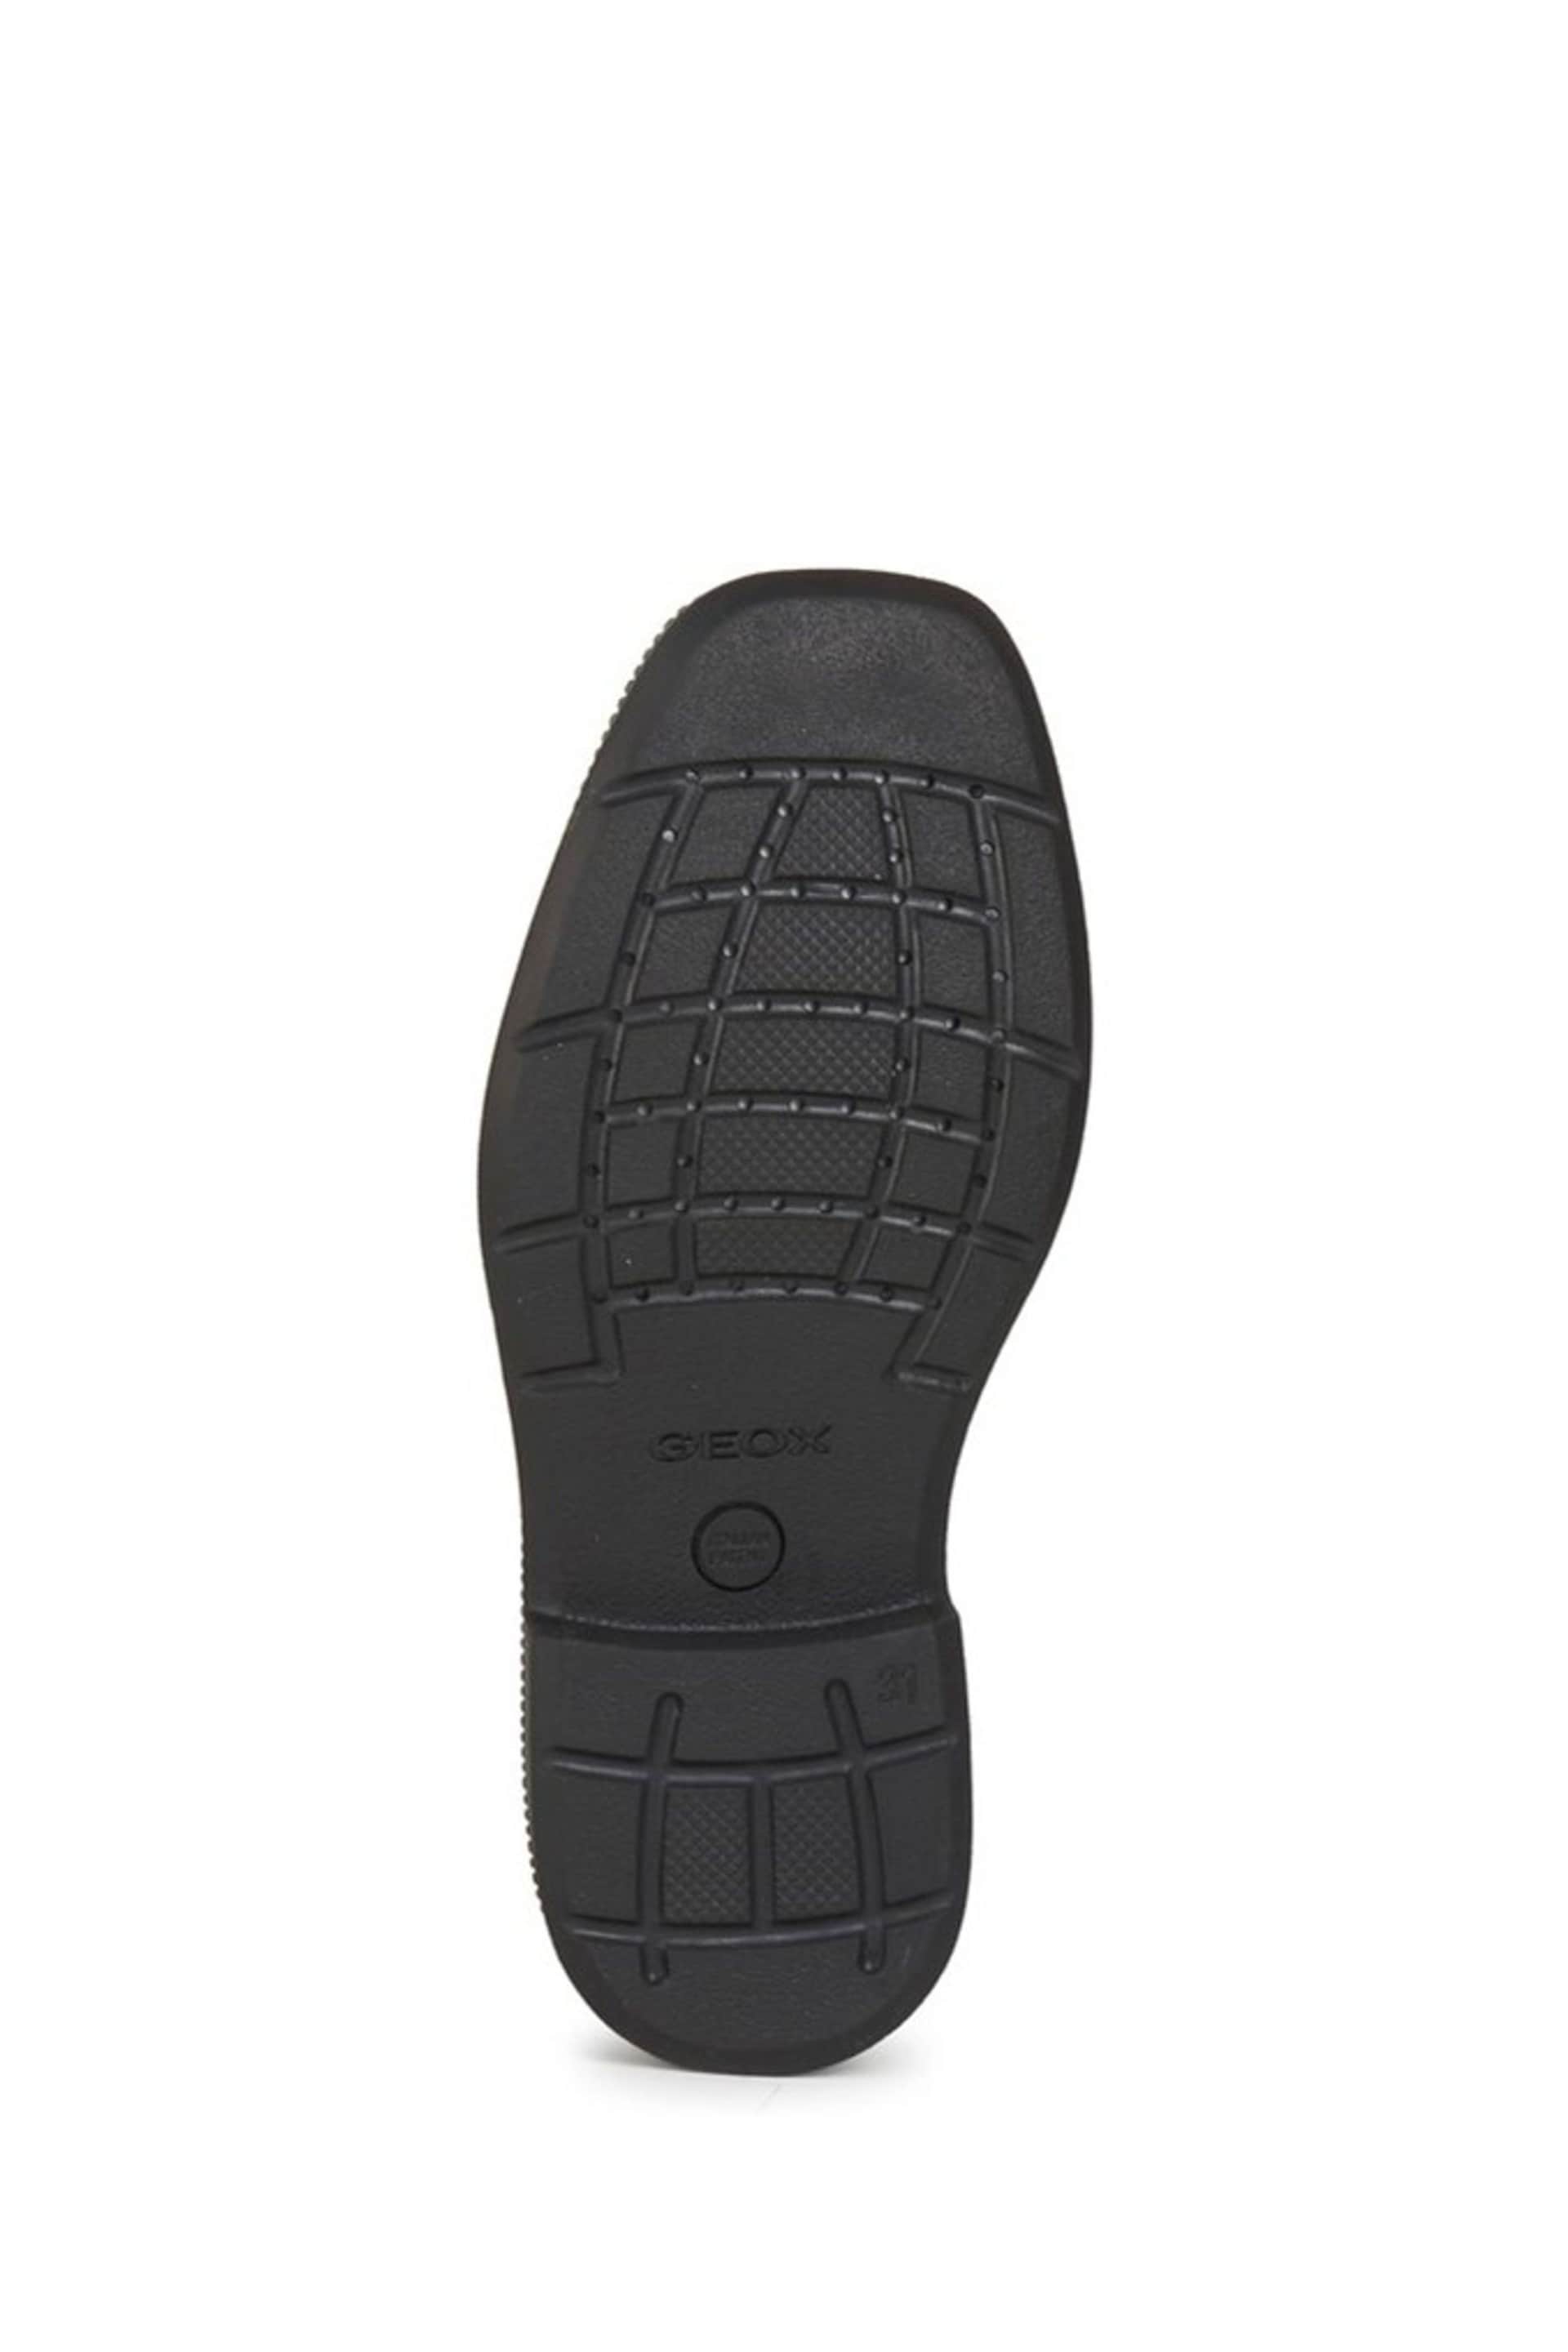 Geox Junior Boy/Unisex's Federico Black Shoes - Image 5 of 5